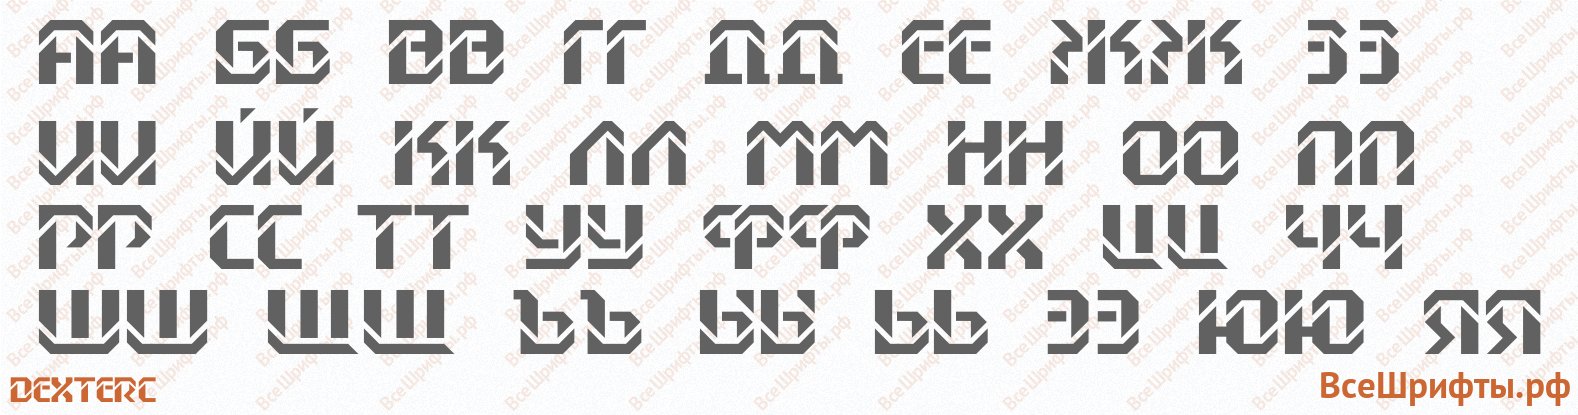 Шрифт DexterC с русскими буквами